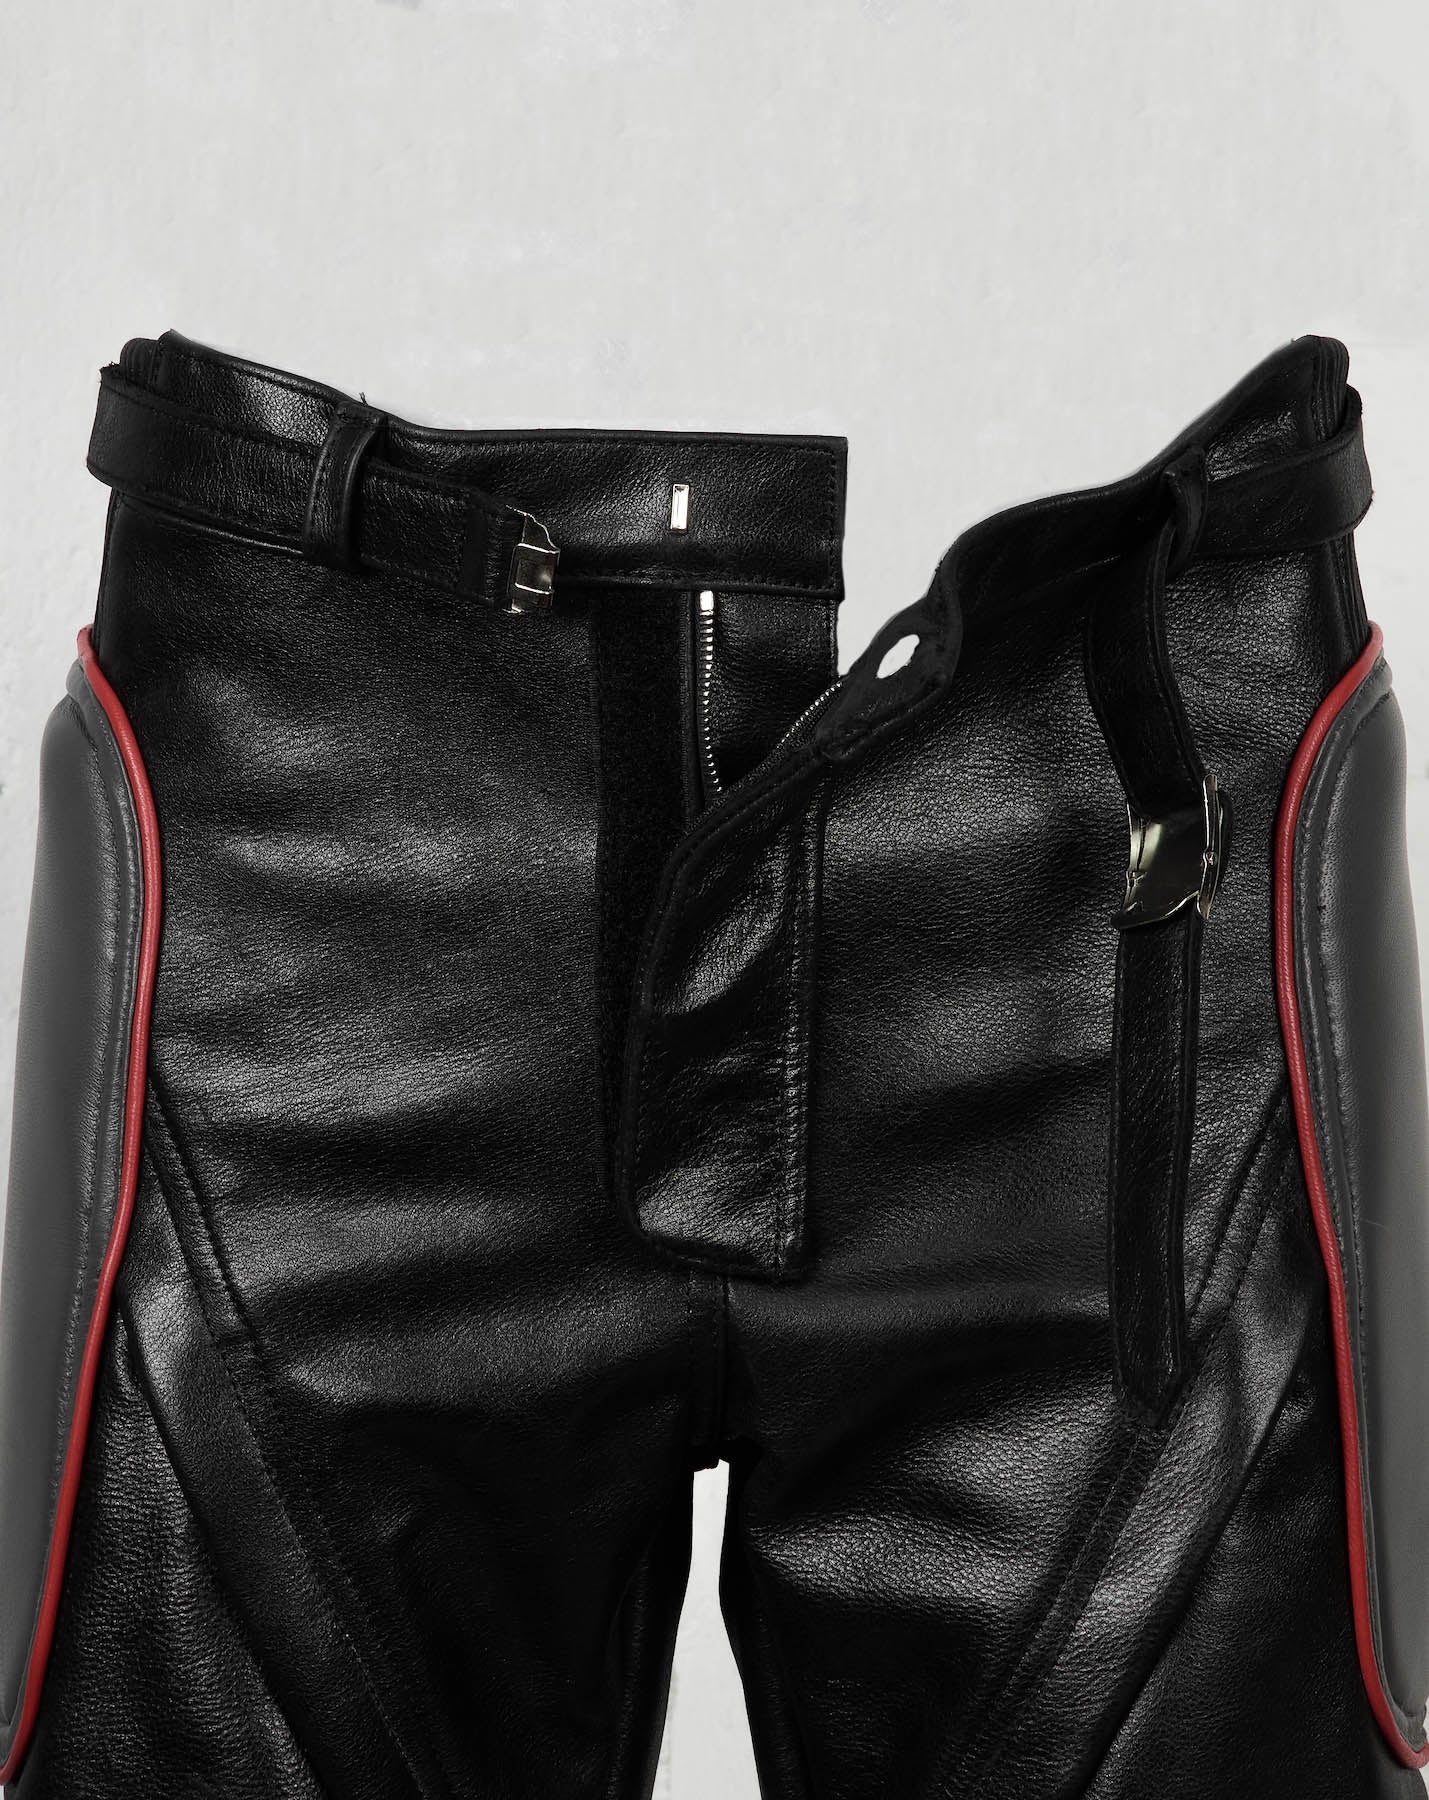 Jaron Baker Moto Pant Leather Studio Flat Lay Waist Detail Unzipped